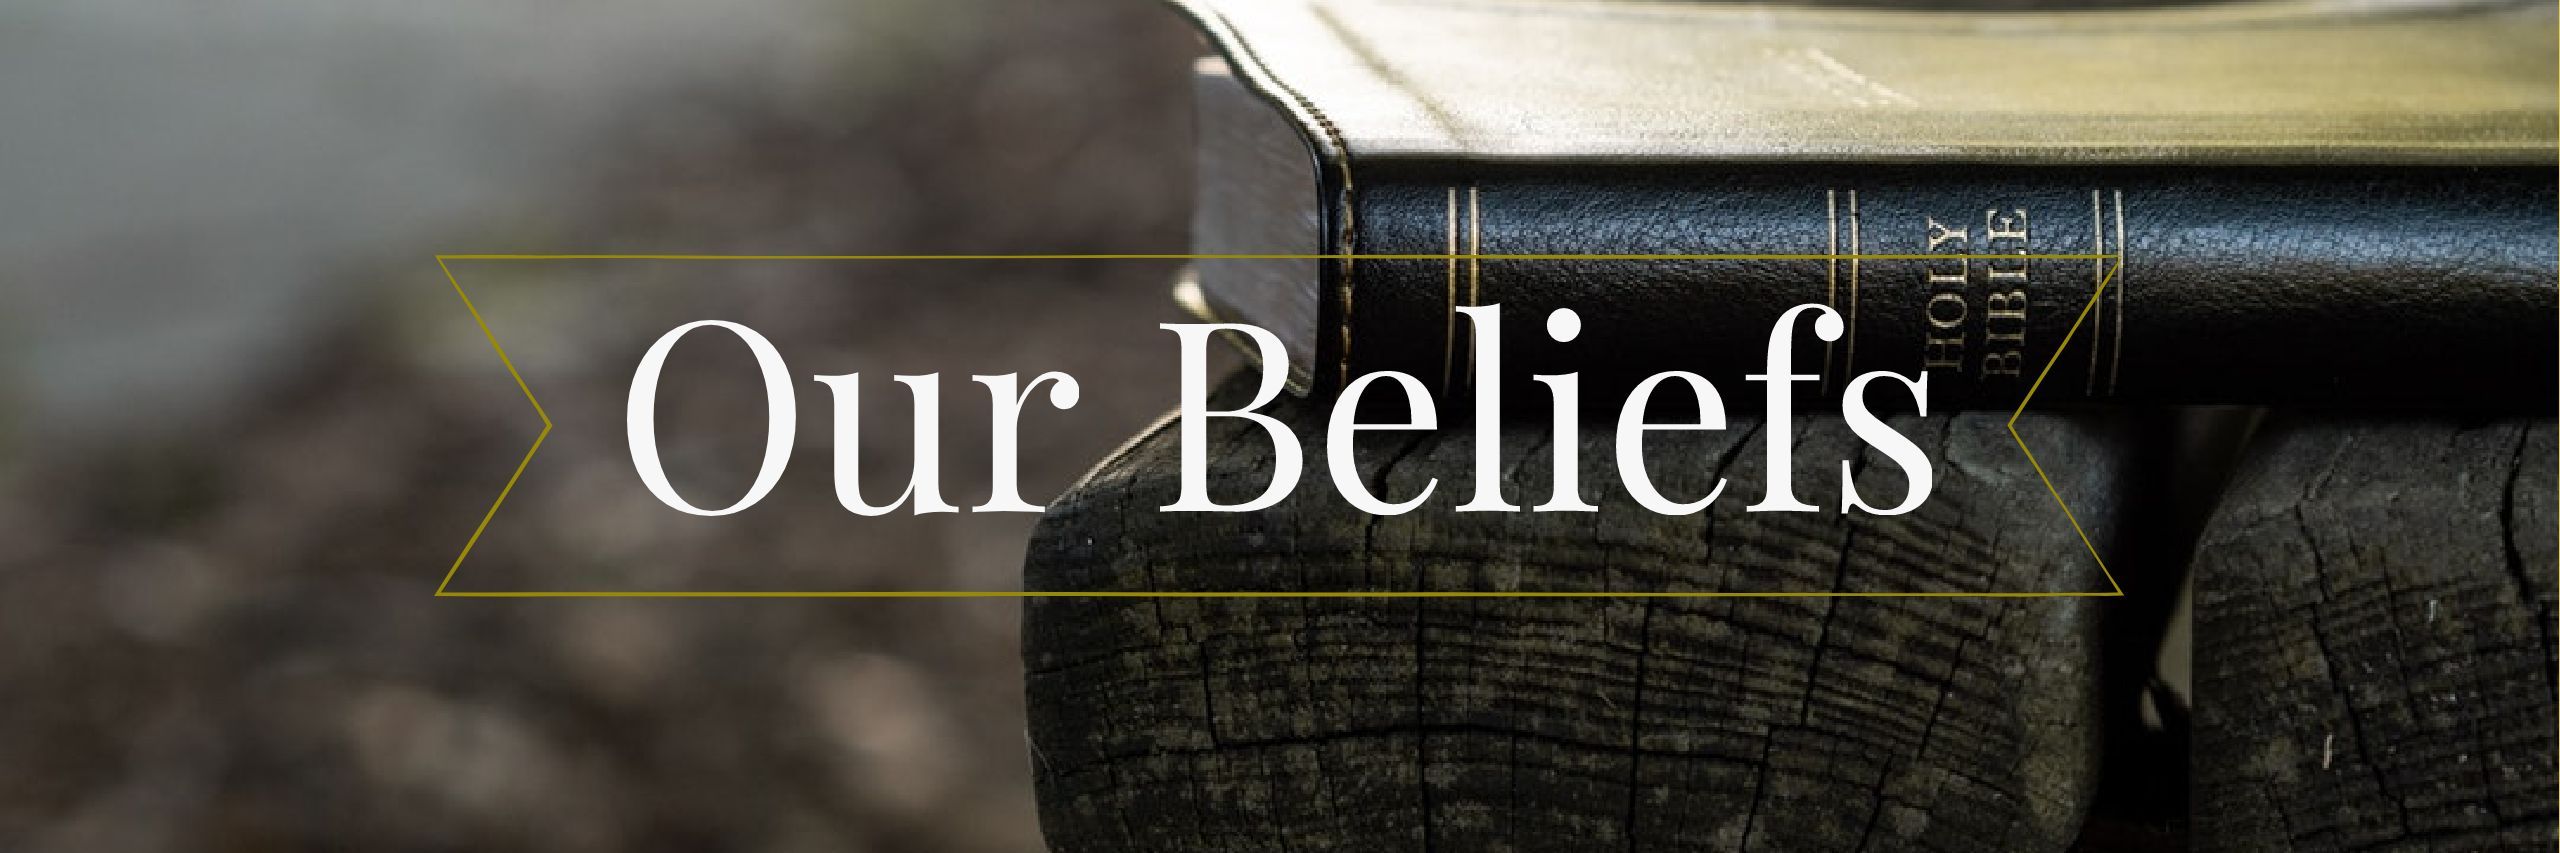 Our Beliefs Bolton Community Church